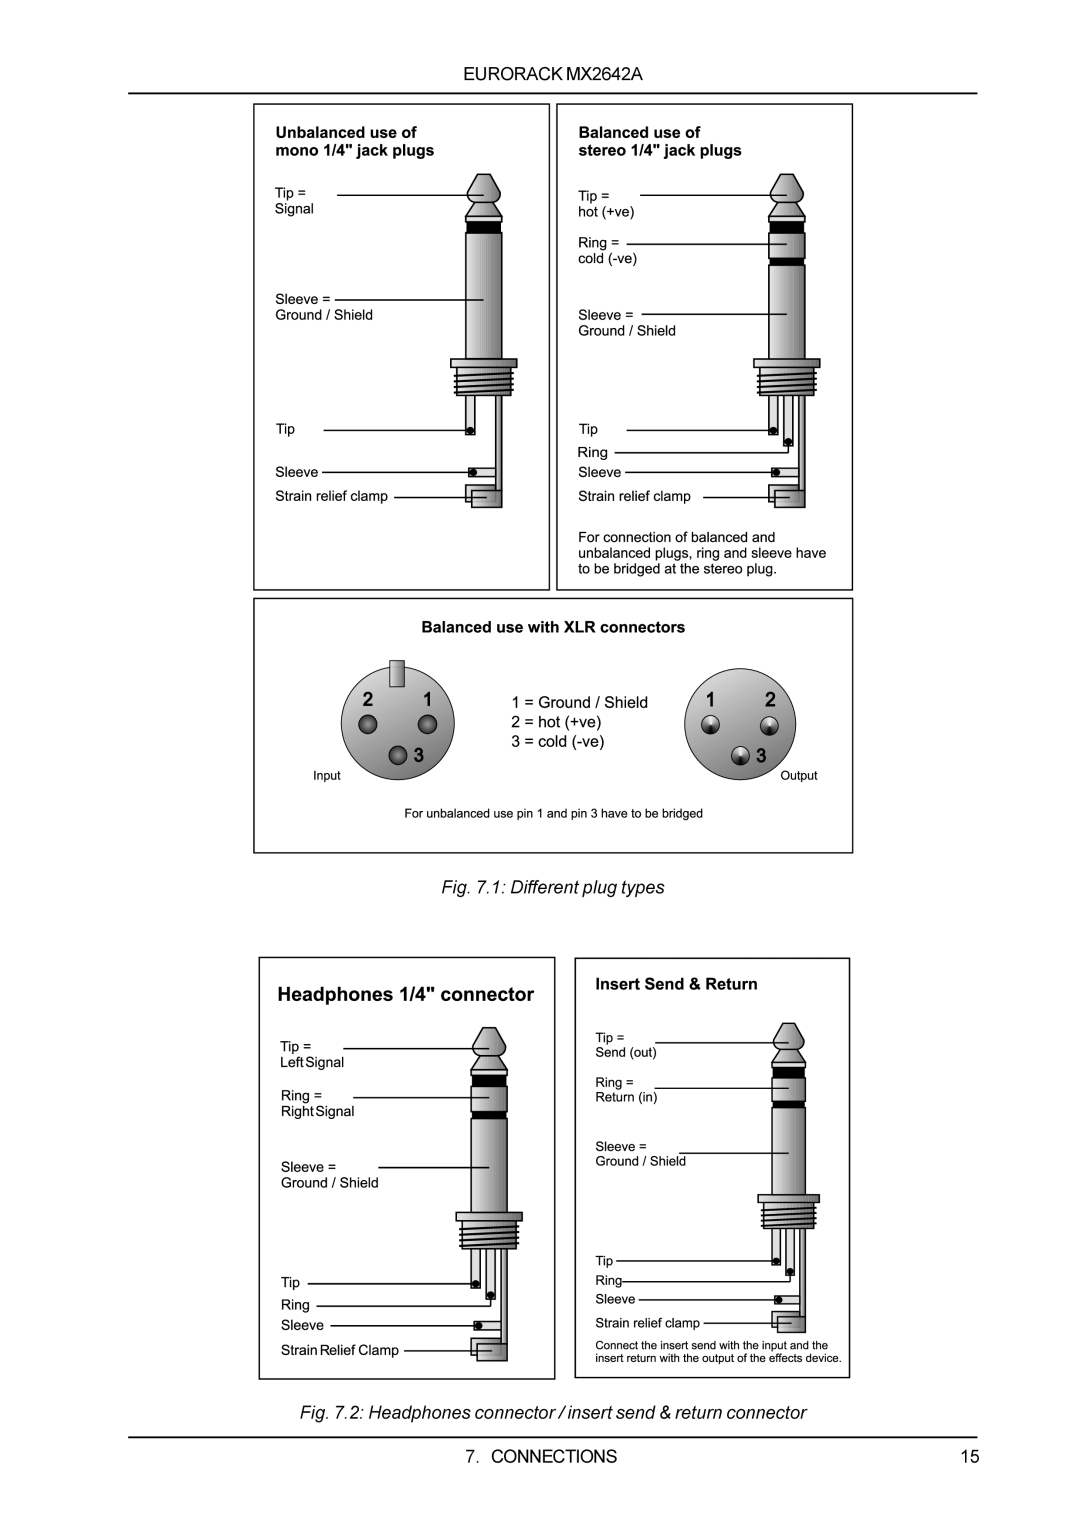 Behringer manual 1 Different plug types, 2 Headphones connector / insert send & return connector, EURORACK MX2642A 